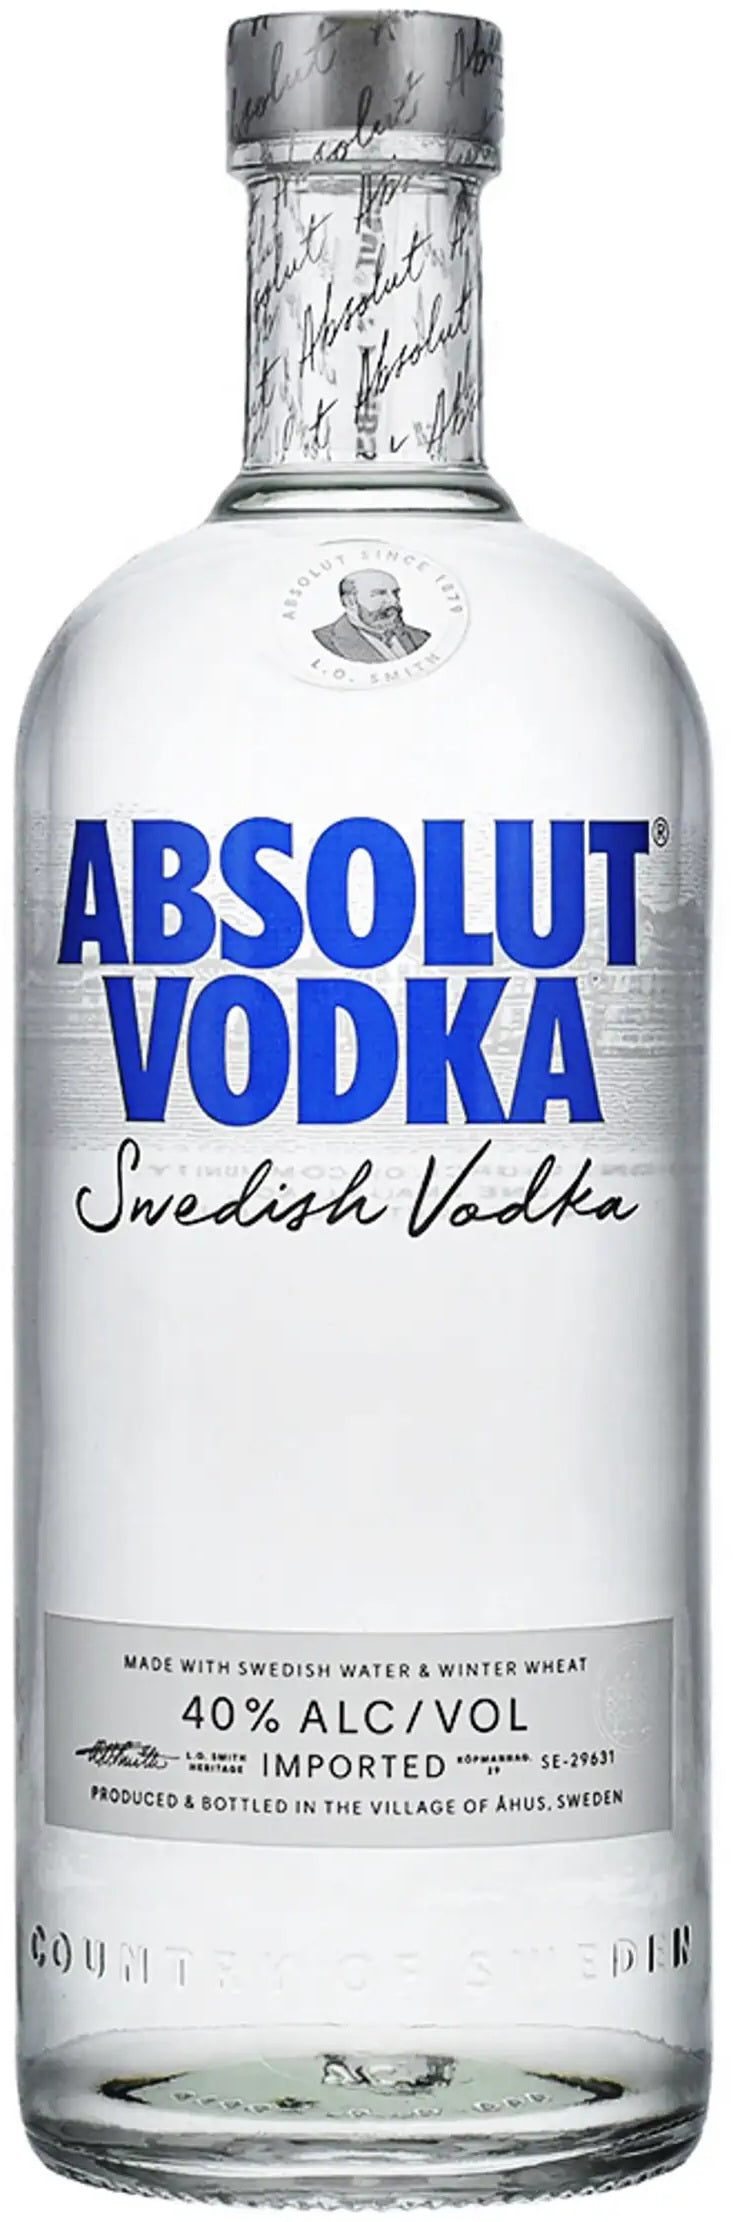 Absolut Vodka 100CL